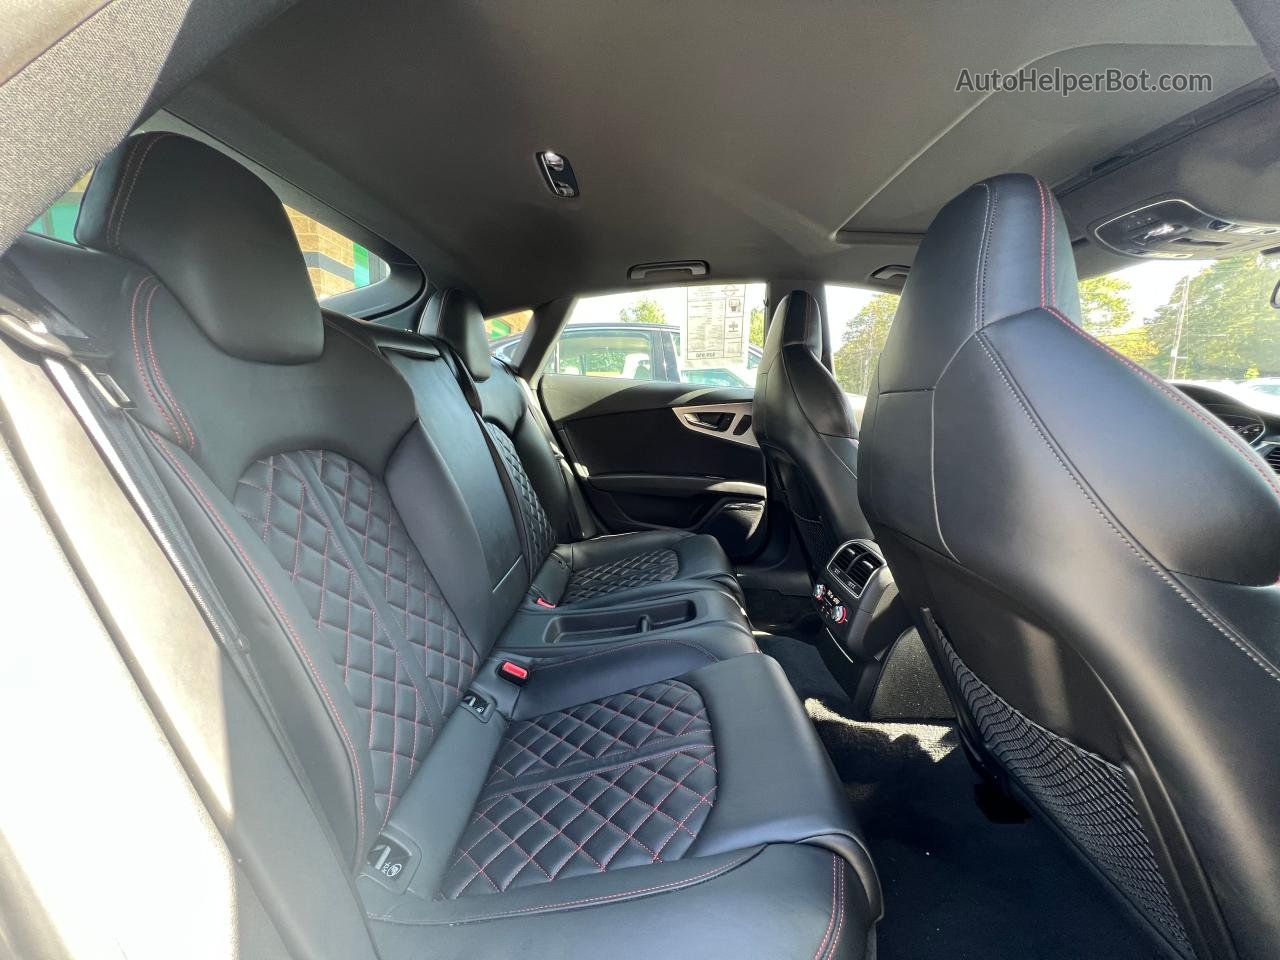 2018 Audi A7 Premium Plus Серый vin: WAUW3AFC7JN064725